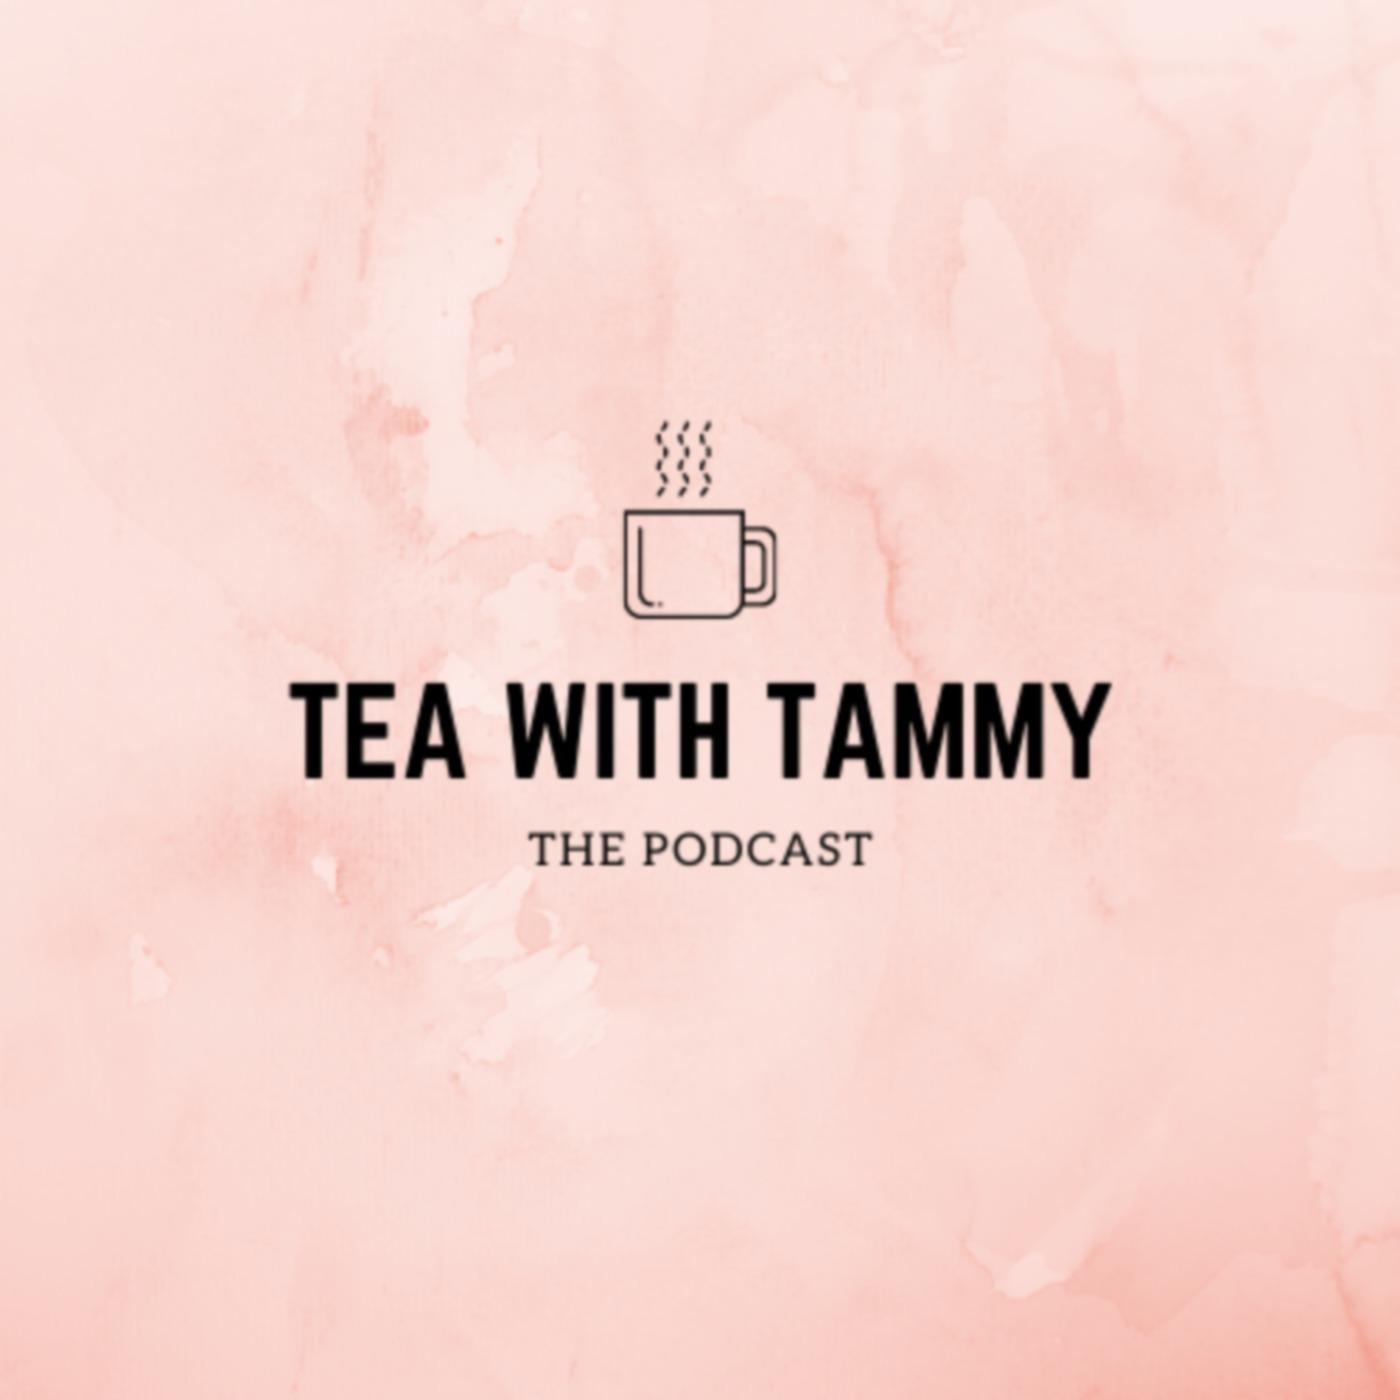 Tea with Tammy